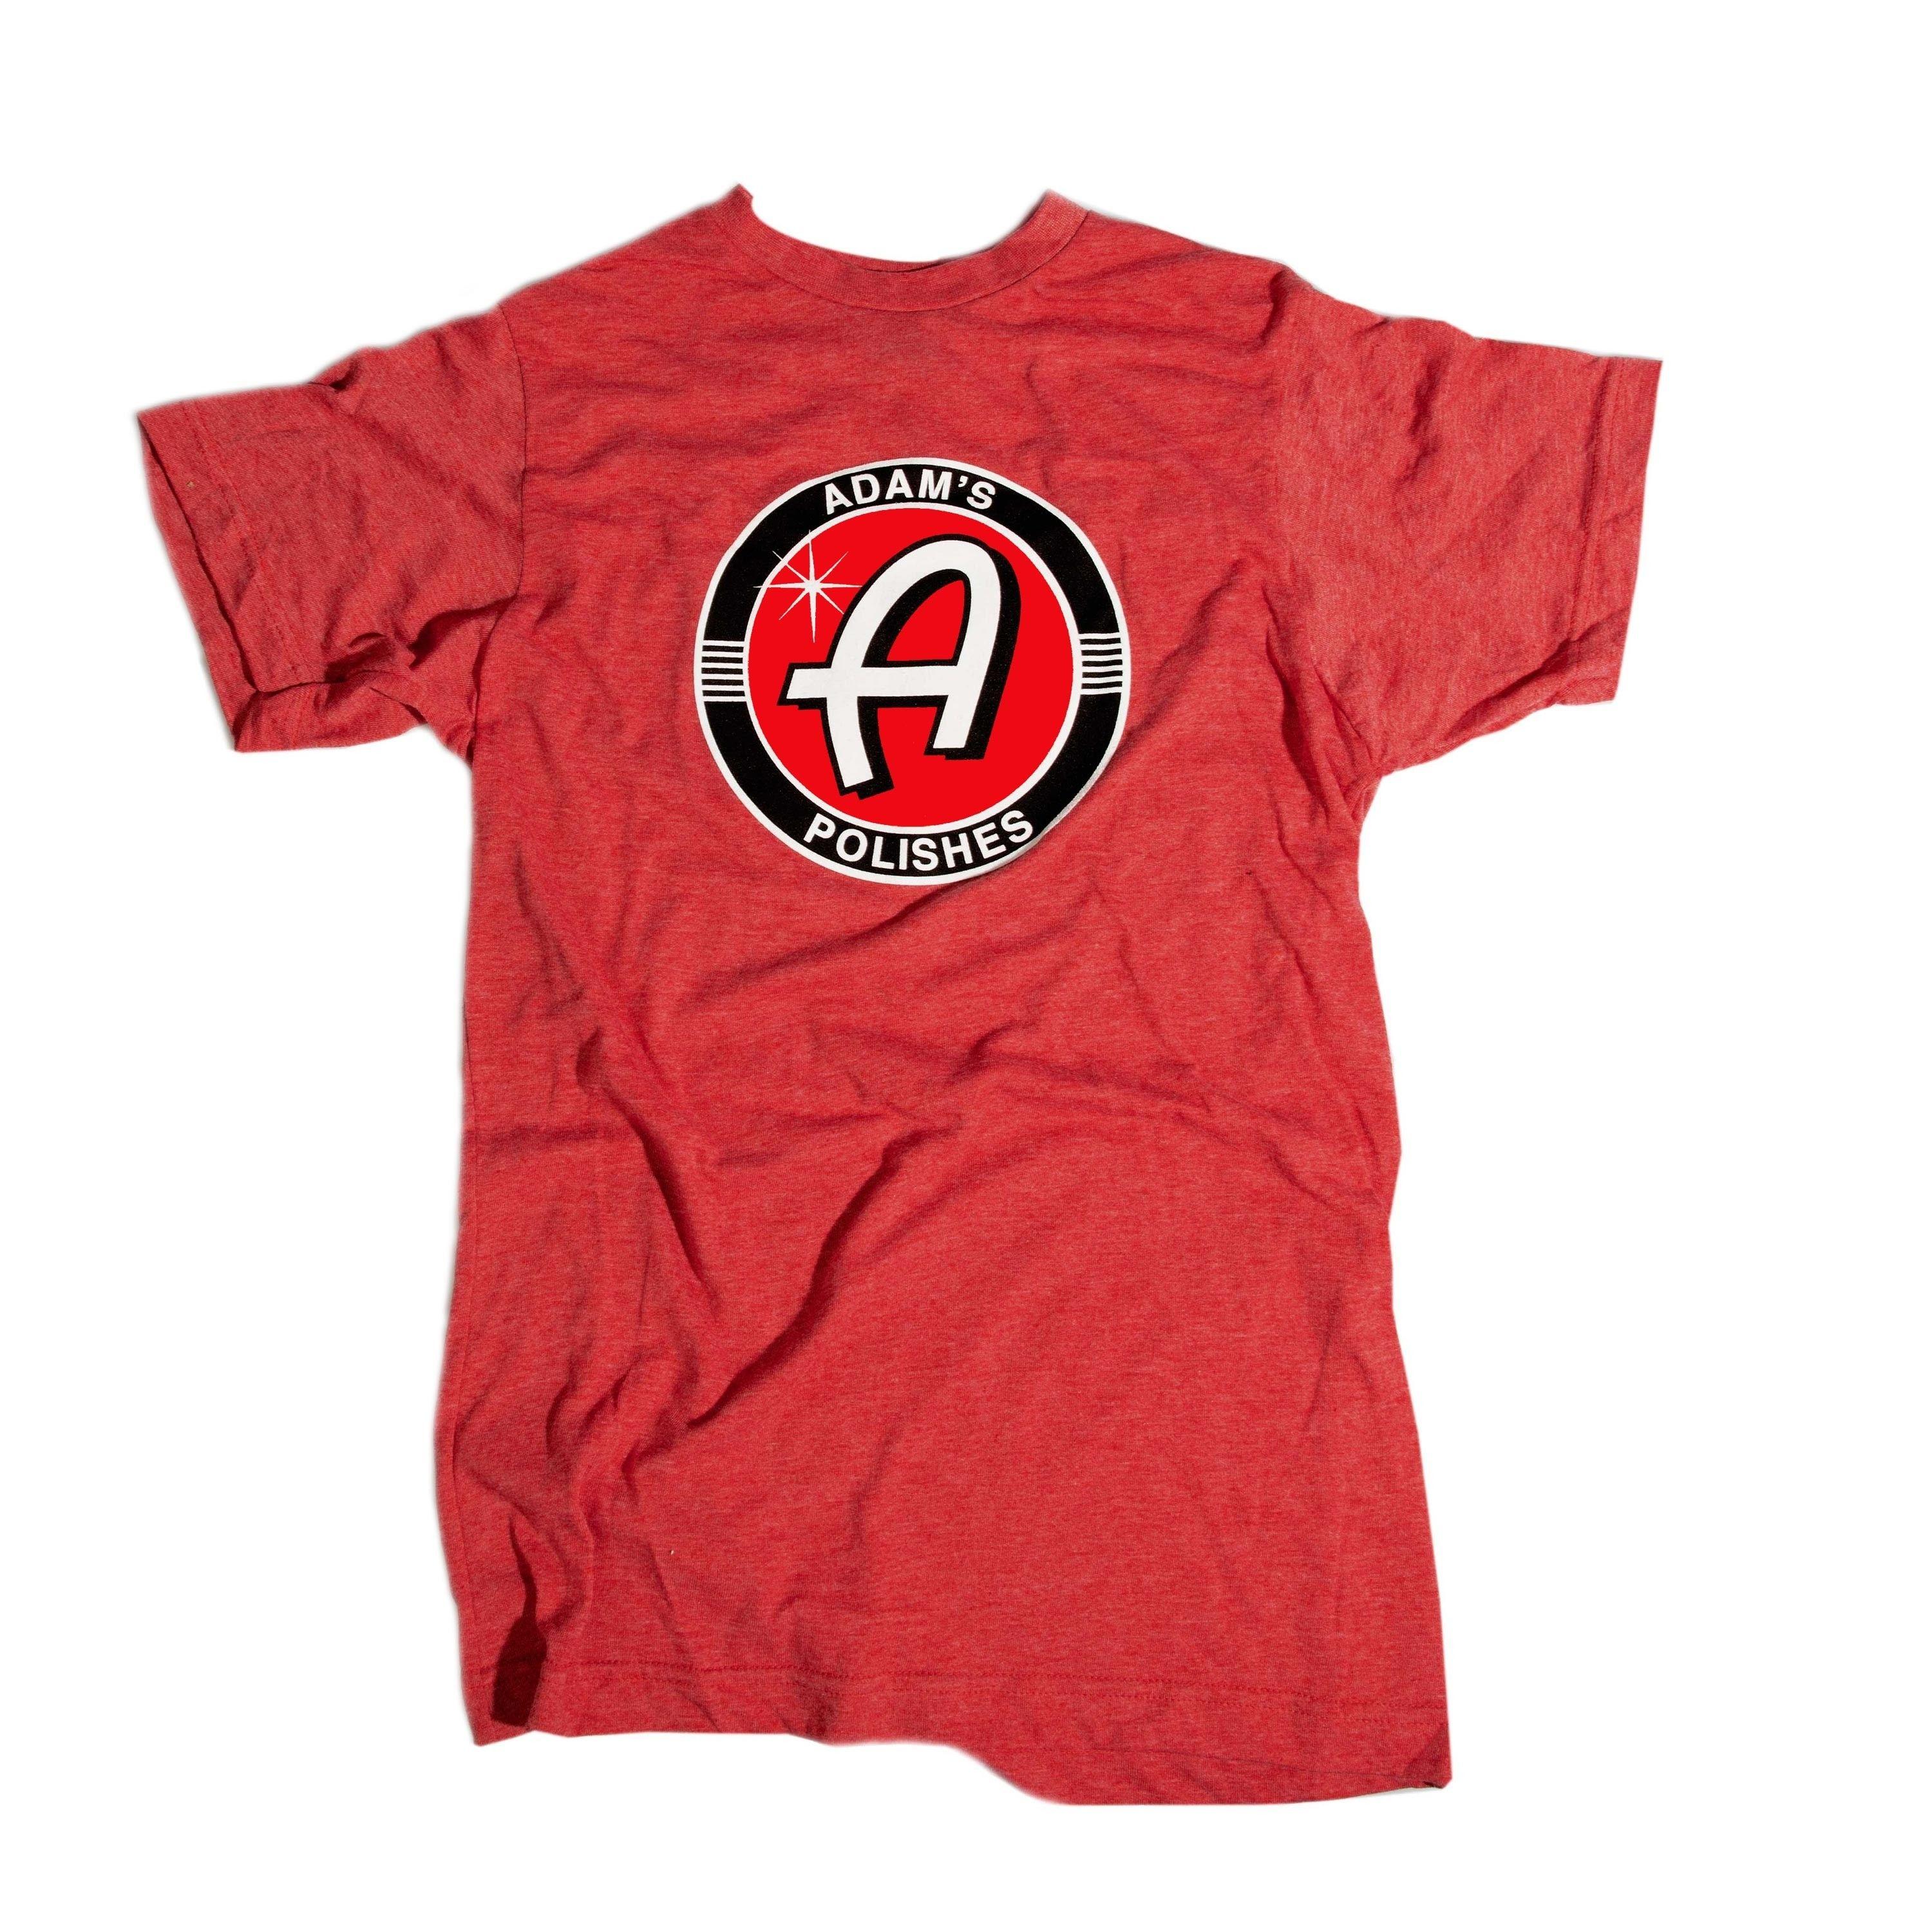 Red Clothing and Apparel Logo - LogoDix